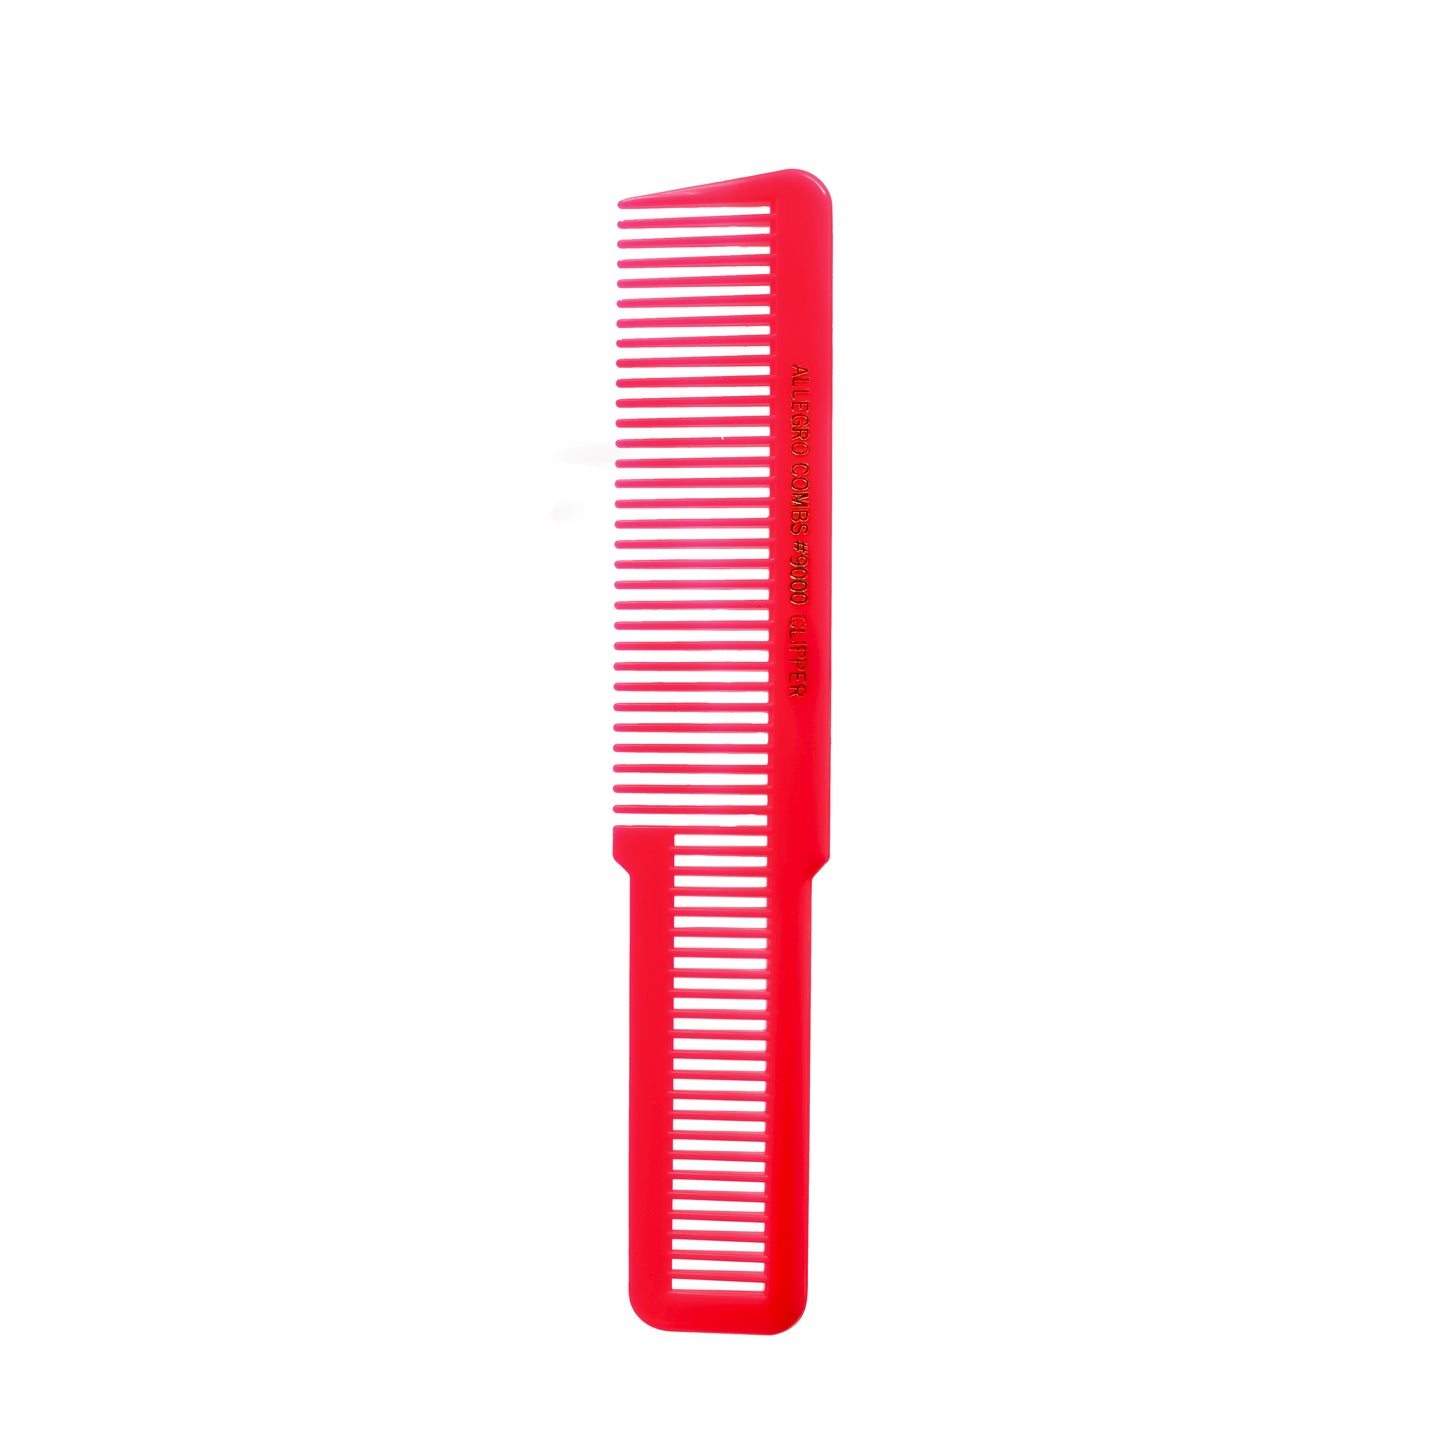 Allegro Combs 9000 Barber Clipper Cutting Wide Combs Blending Flat Top Combs Fading Shampoo Combs Neon Pink 6 Pk.